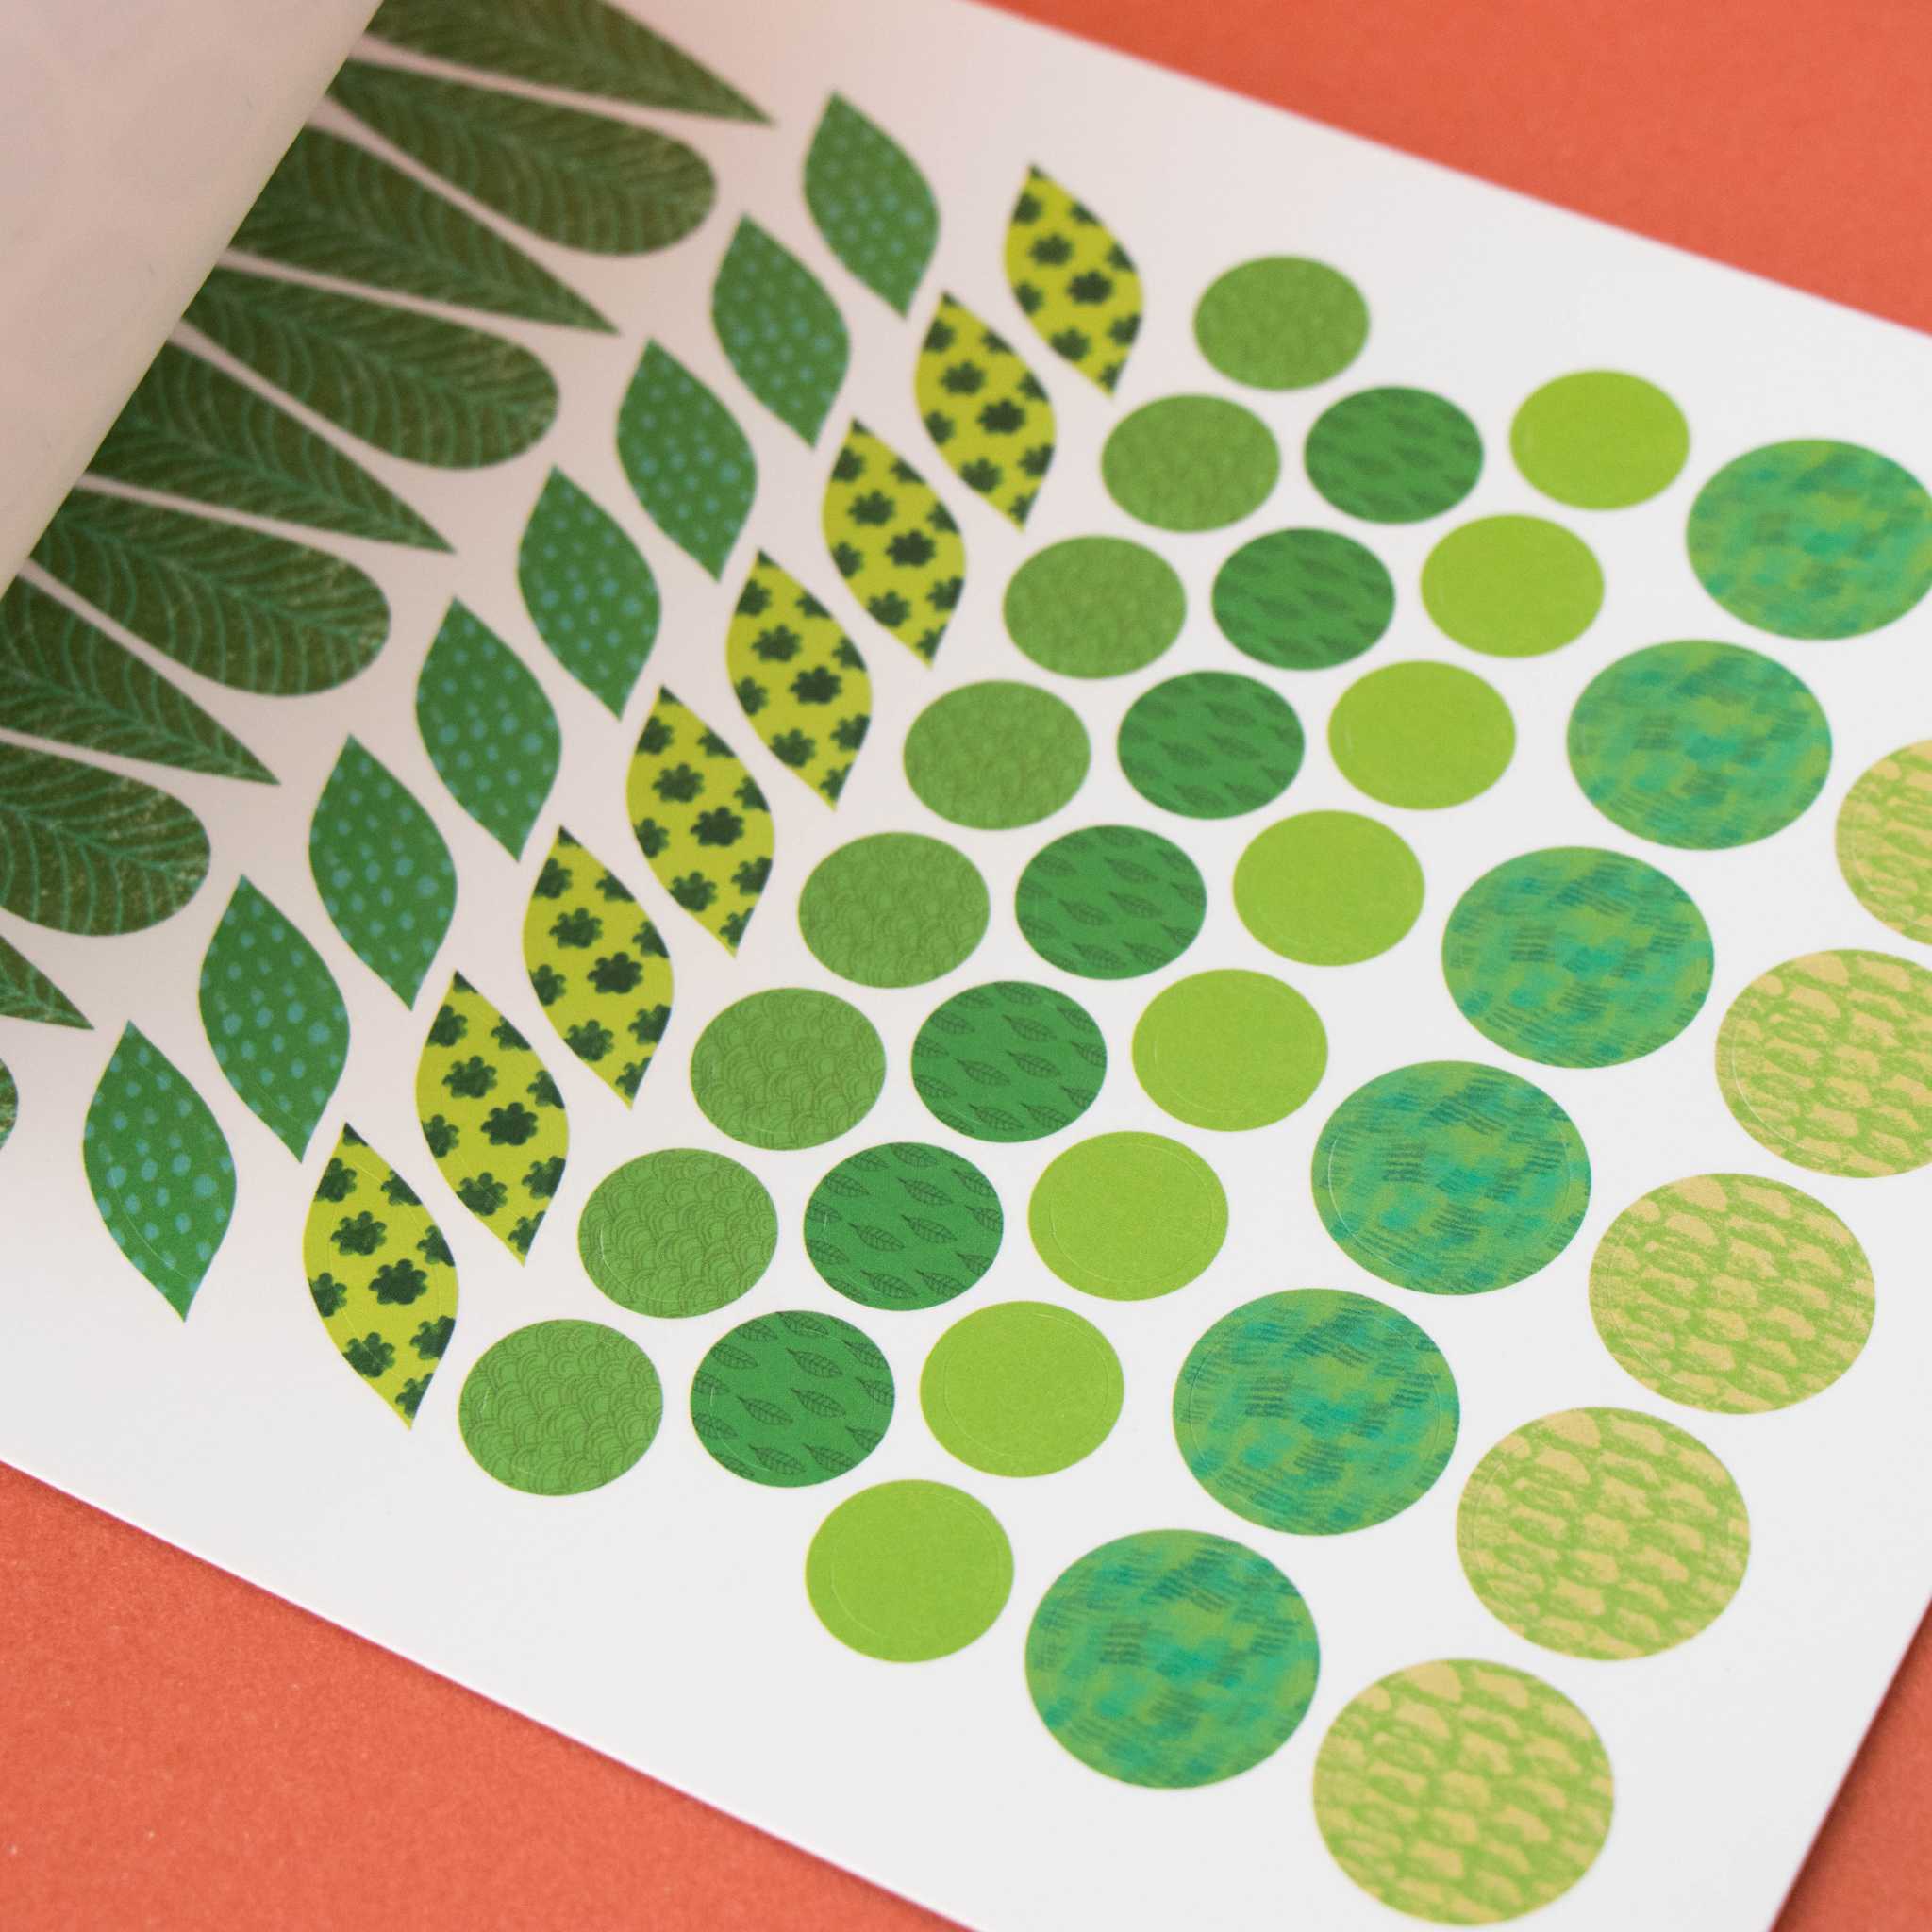 Londji Art & Stickers Activity Book Showing Green Stickers